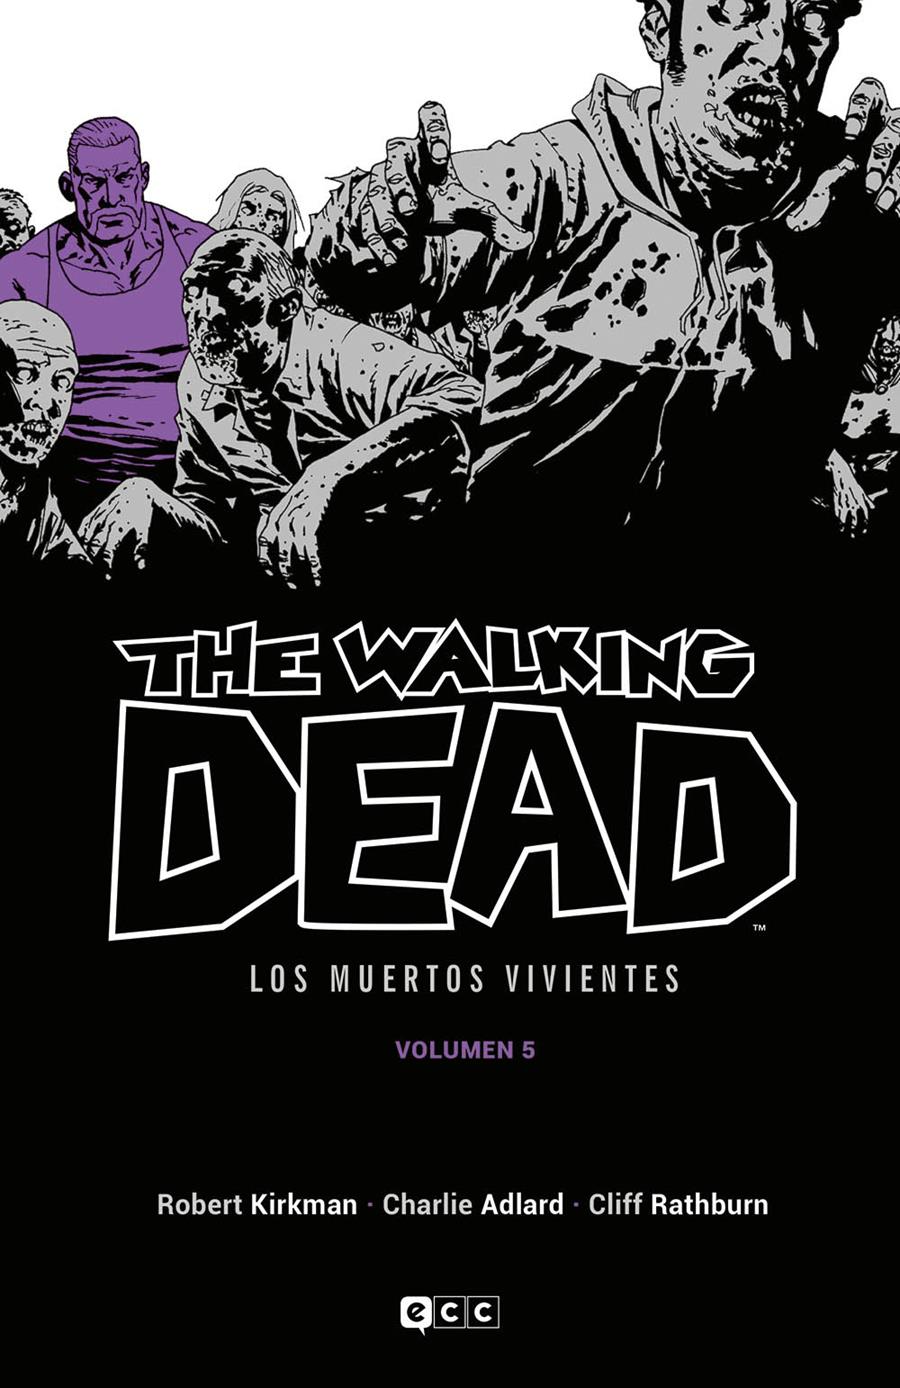 The Walking Dead (Los muertos vivientes) vol. 05 de 16 | N0921-ECC46 | Charlie Adlard / Robert Kirkman | Terra de Còmic - Tu tienda de cómics online especializada en cómics, manga y merchandising